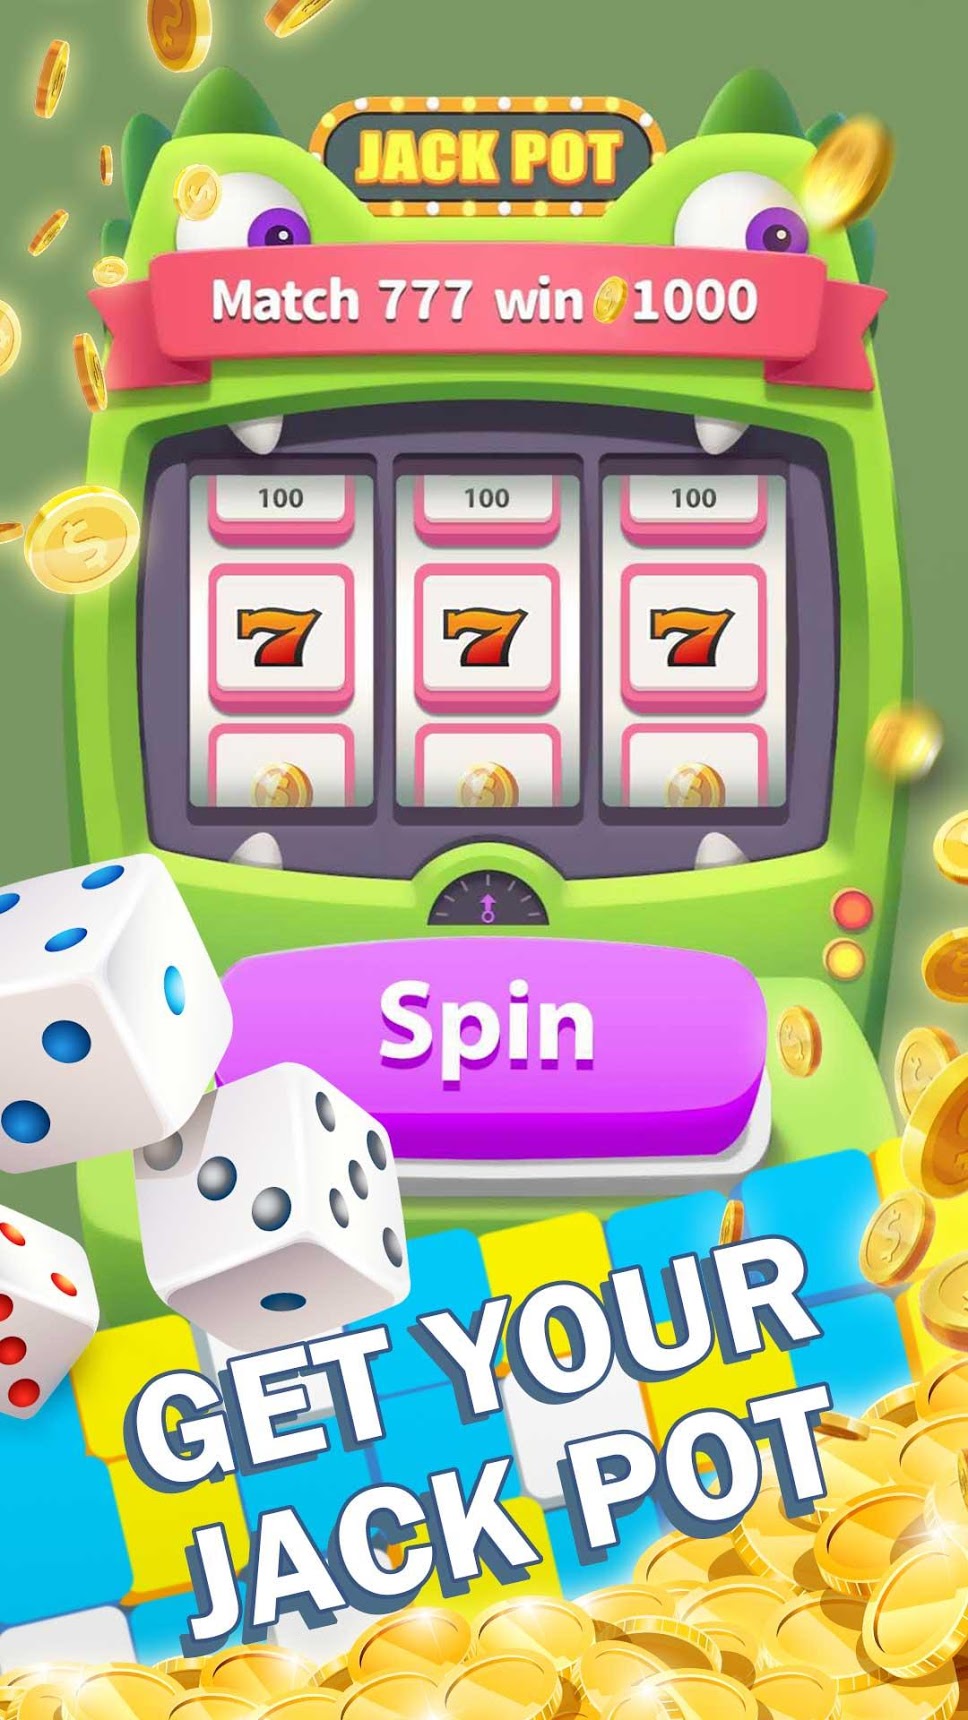 magic dice paypal app